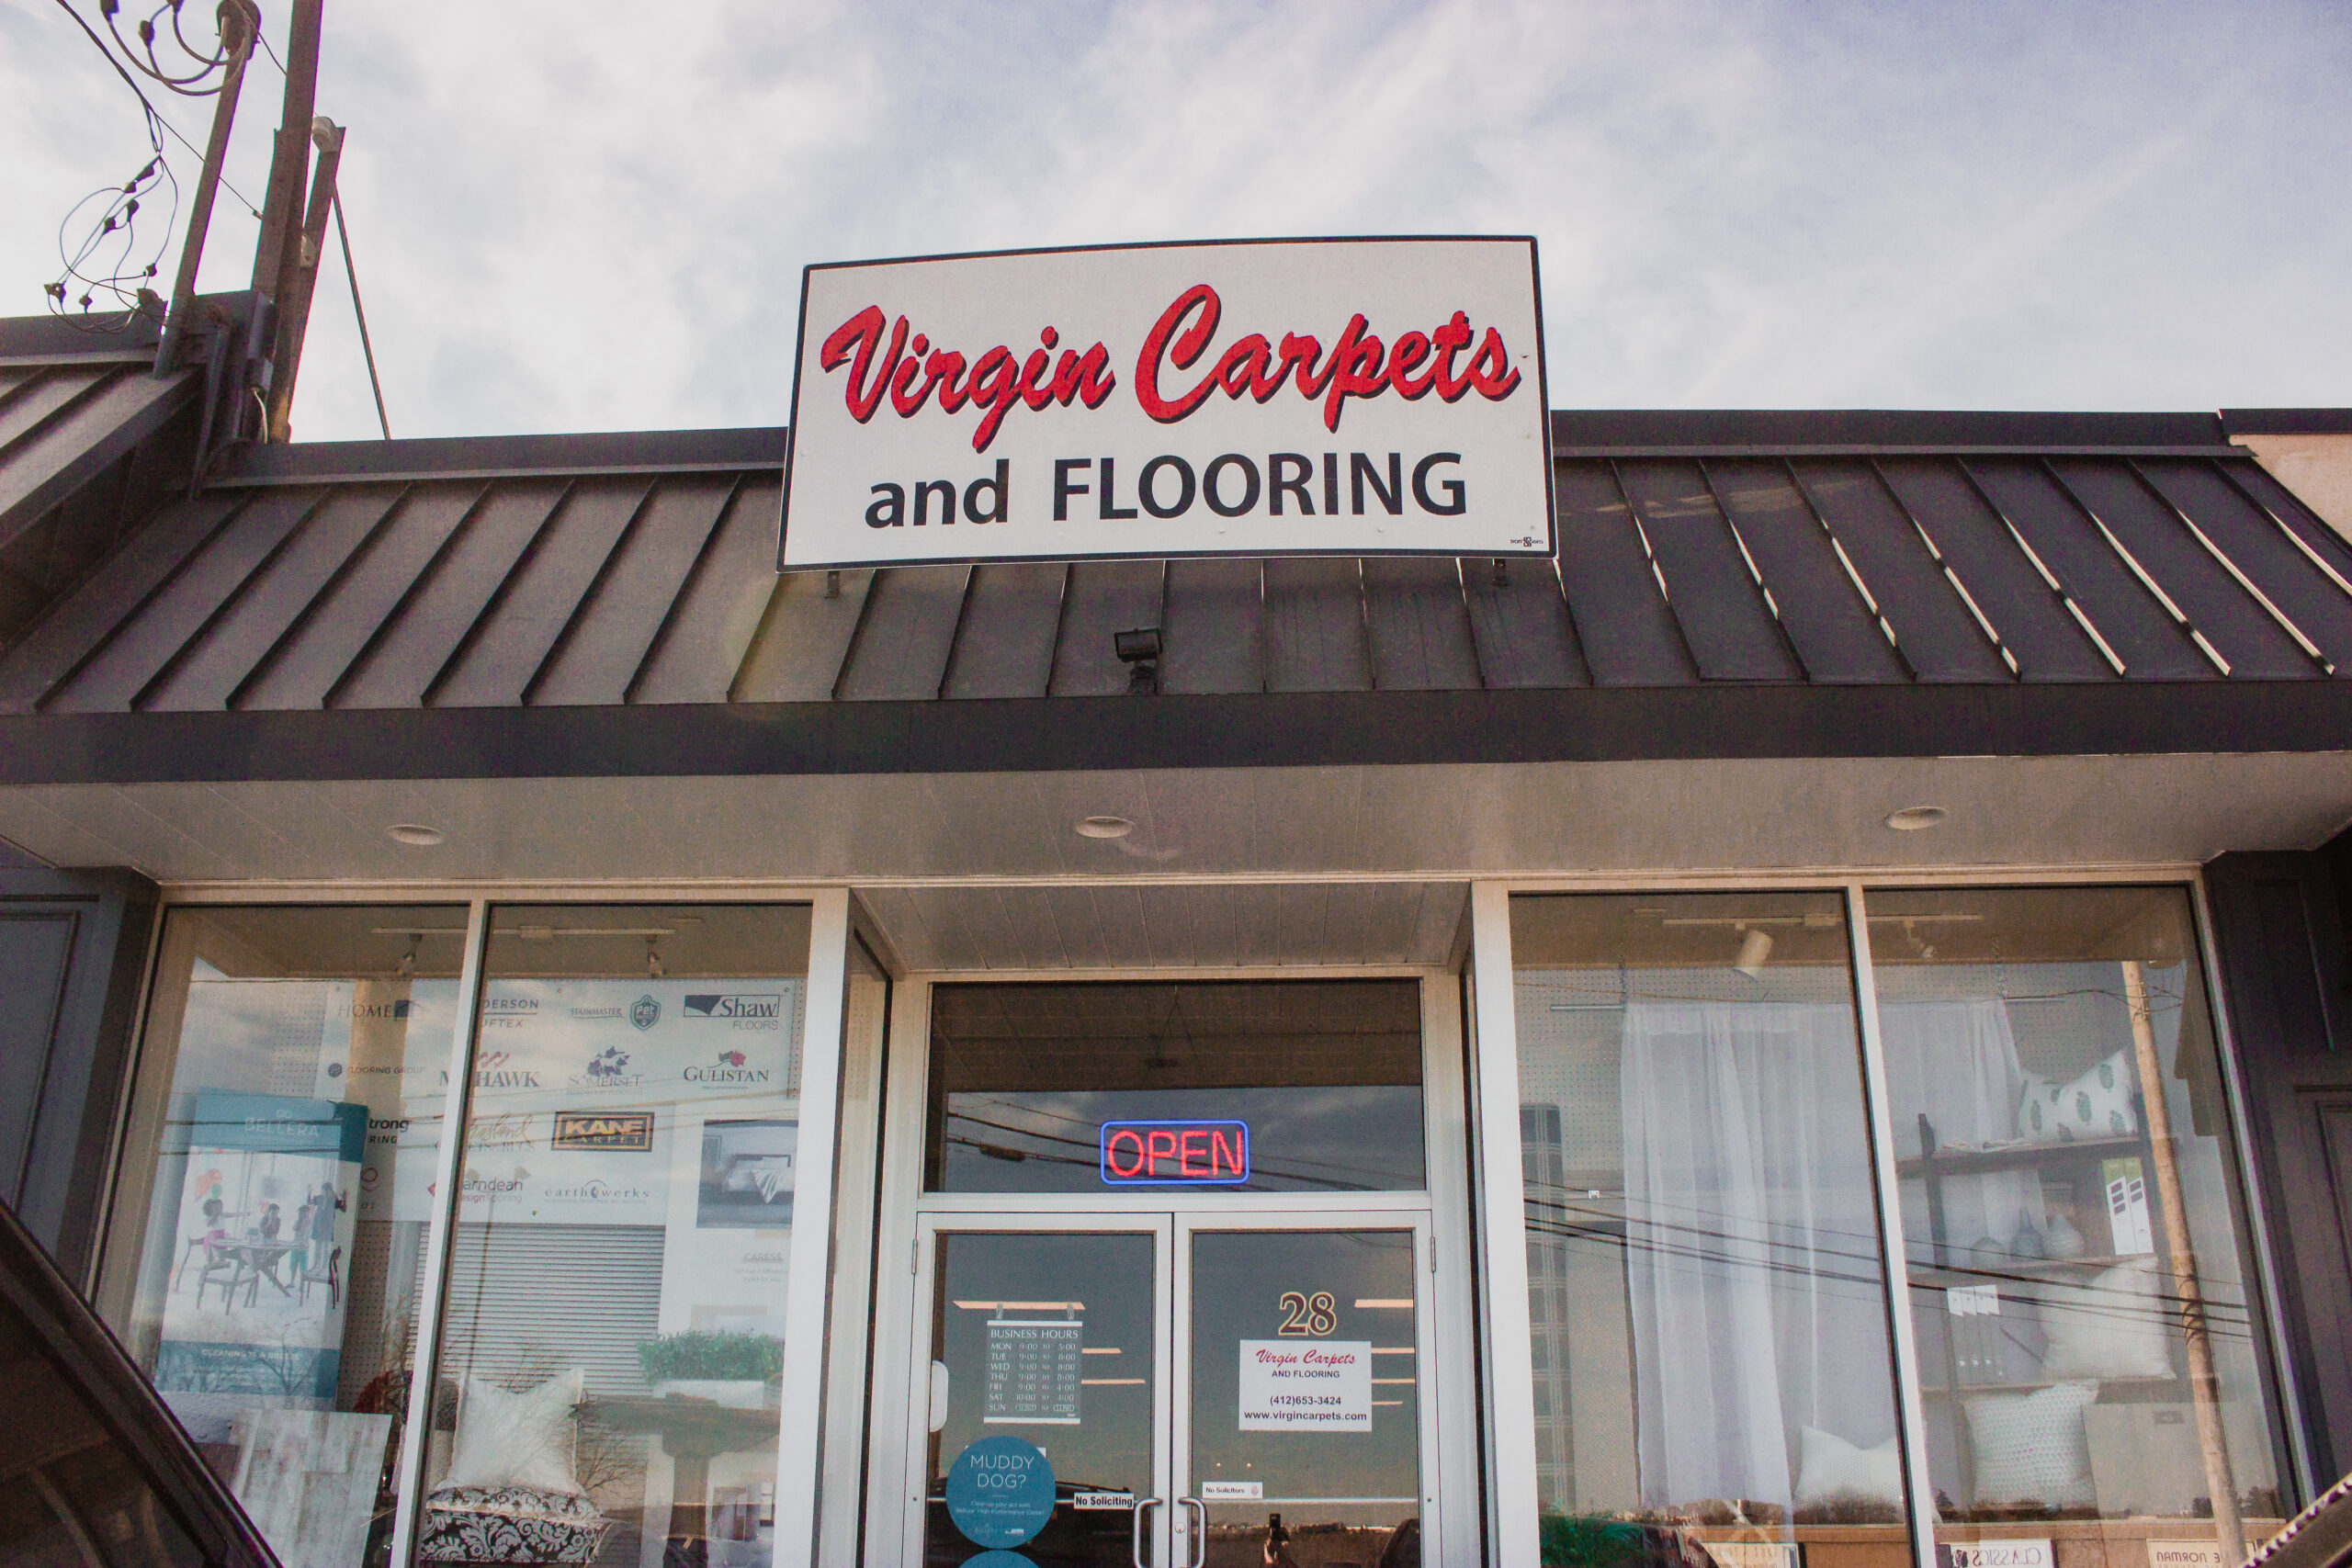 The Virgin Carpets Showroom